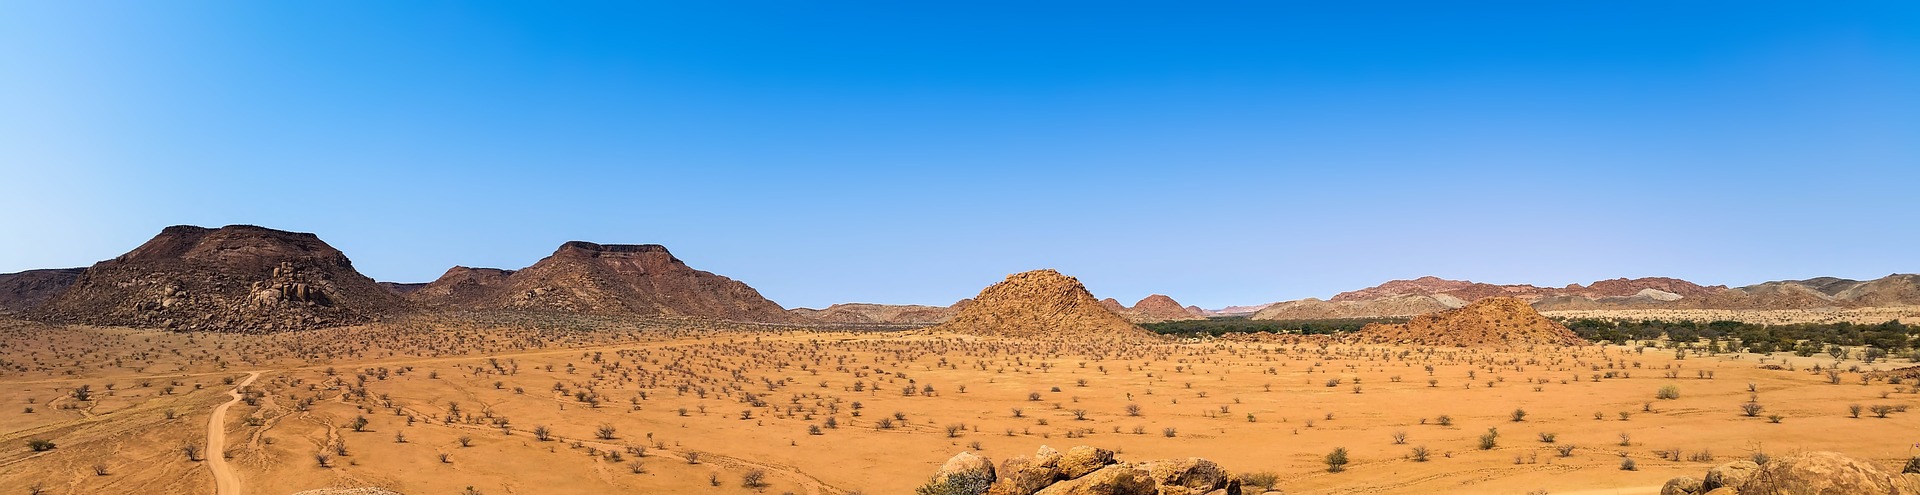 Afrika dürre Landschaft/Wüste